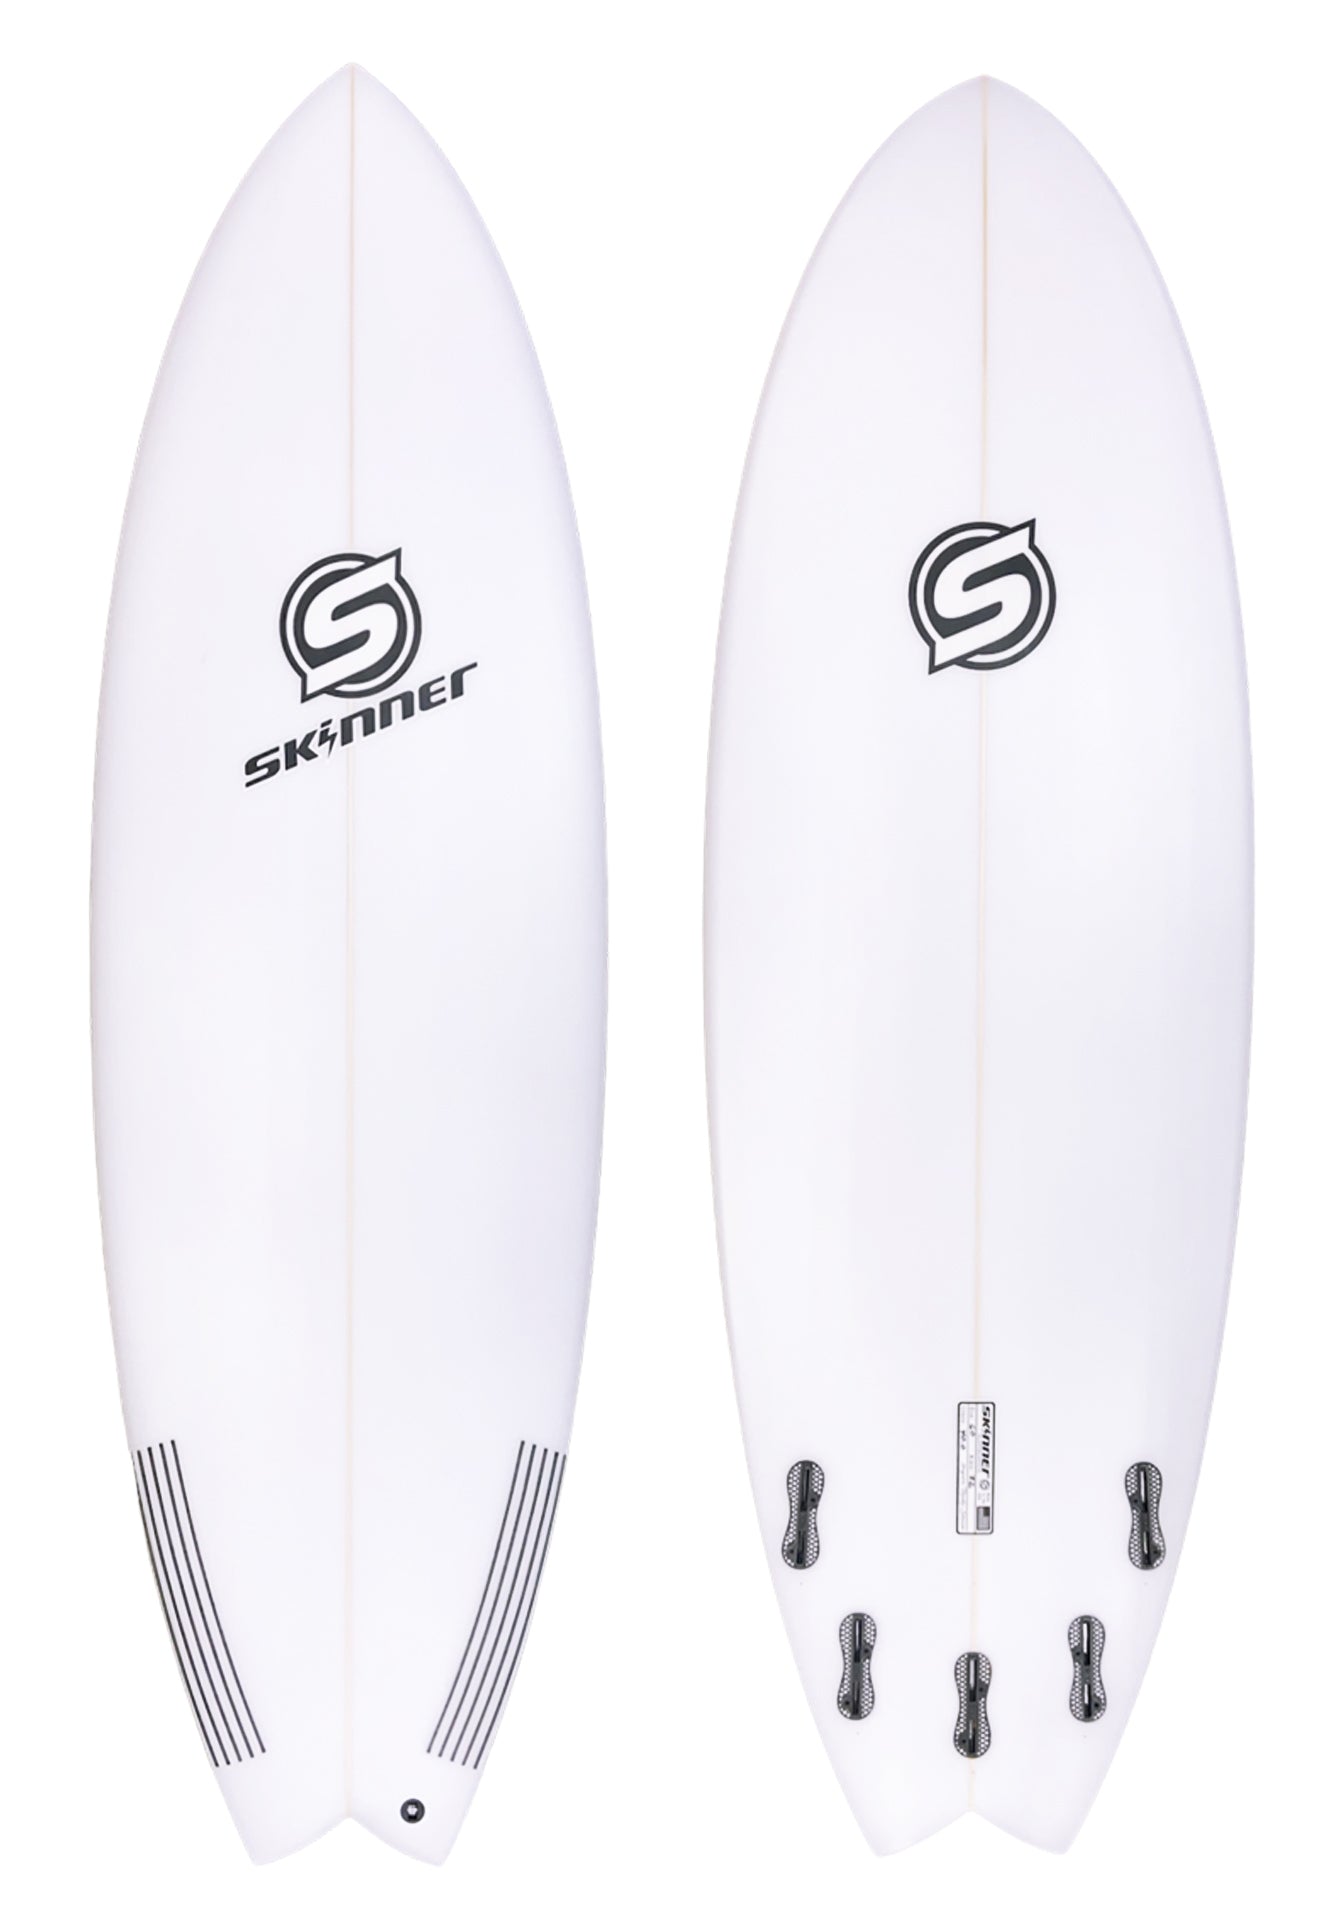 Skinner 6'0 x 22" x 40 Liters Poly 5 fin Fish Surfboard Surfboard